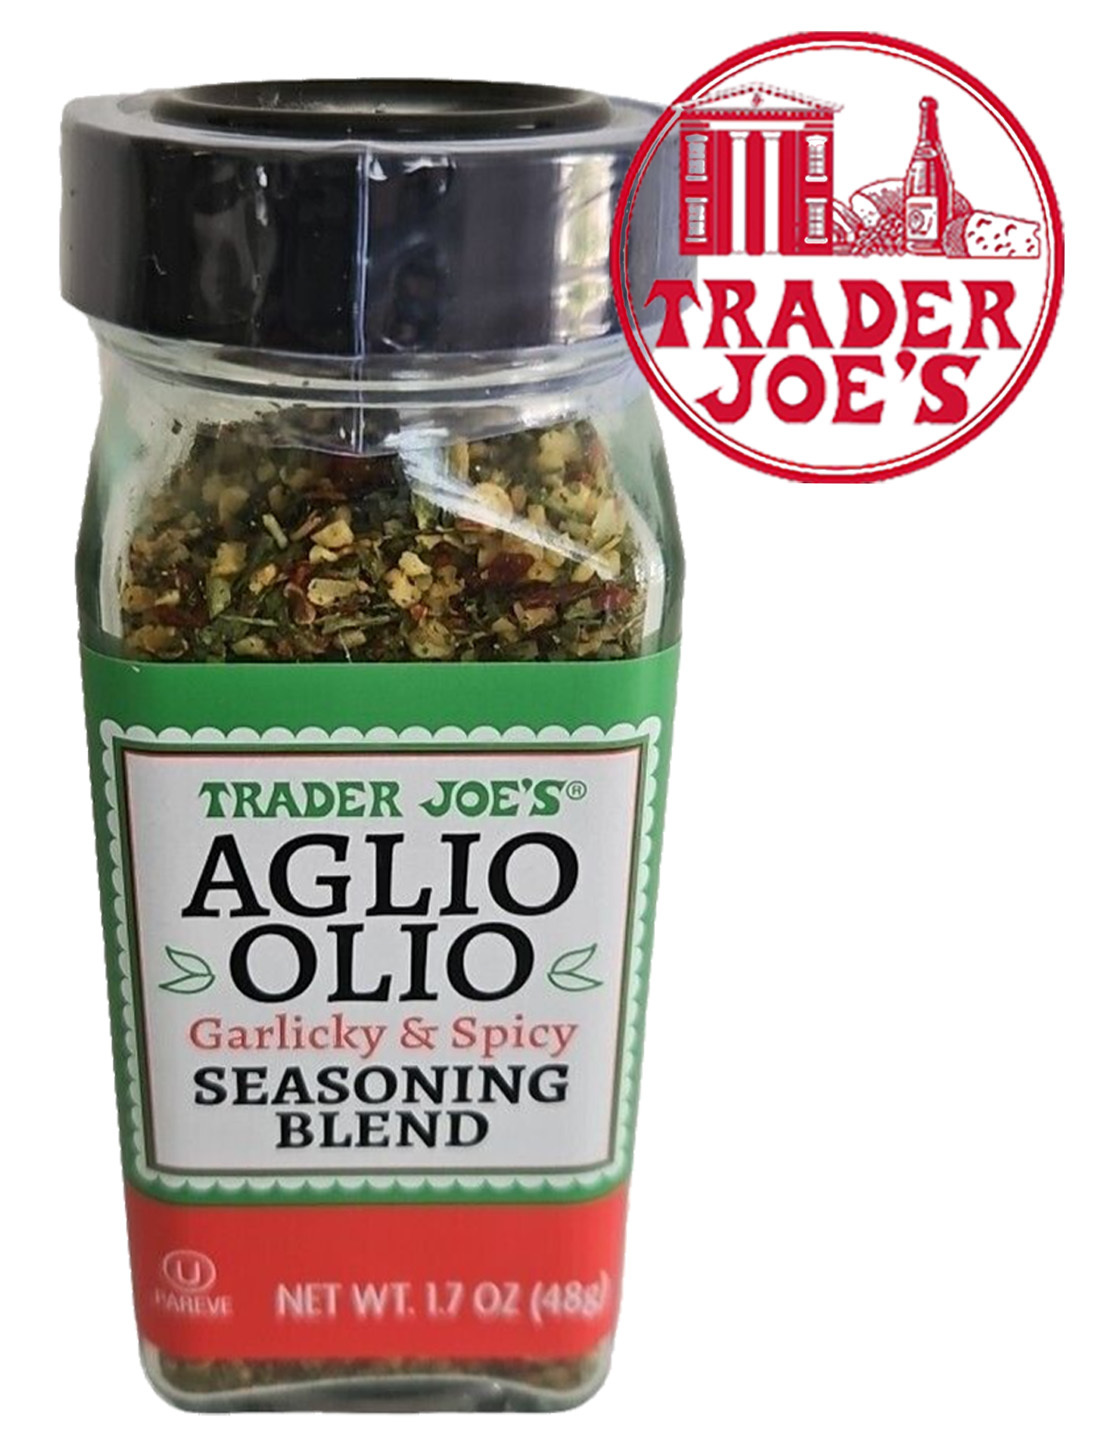 Trader Joe's Aglio Olio Garlicky & Spicy Seasoning Blend NET WT 1.7 OZ - $9.50